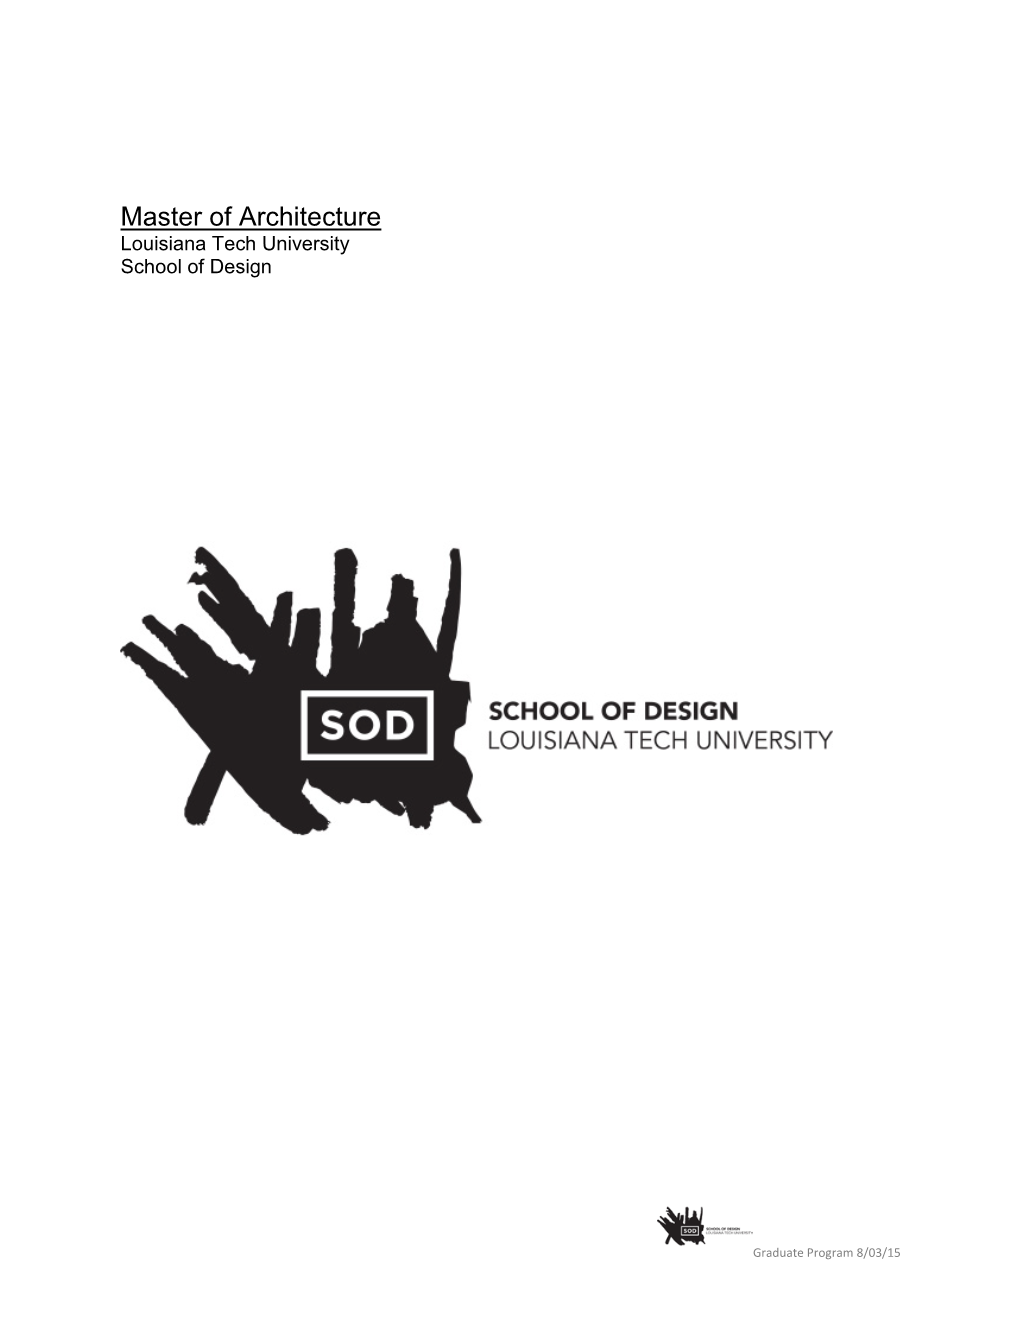 Master of Architecture Louisiana Tech University School of Design